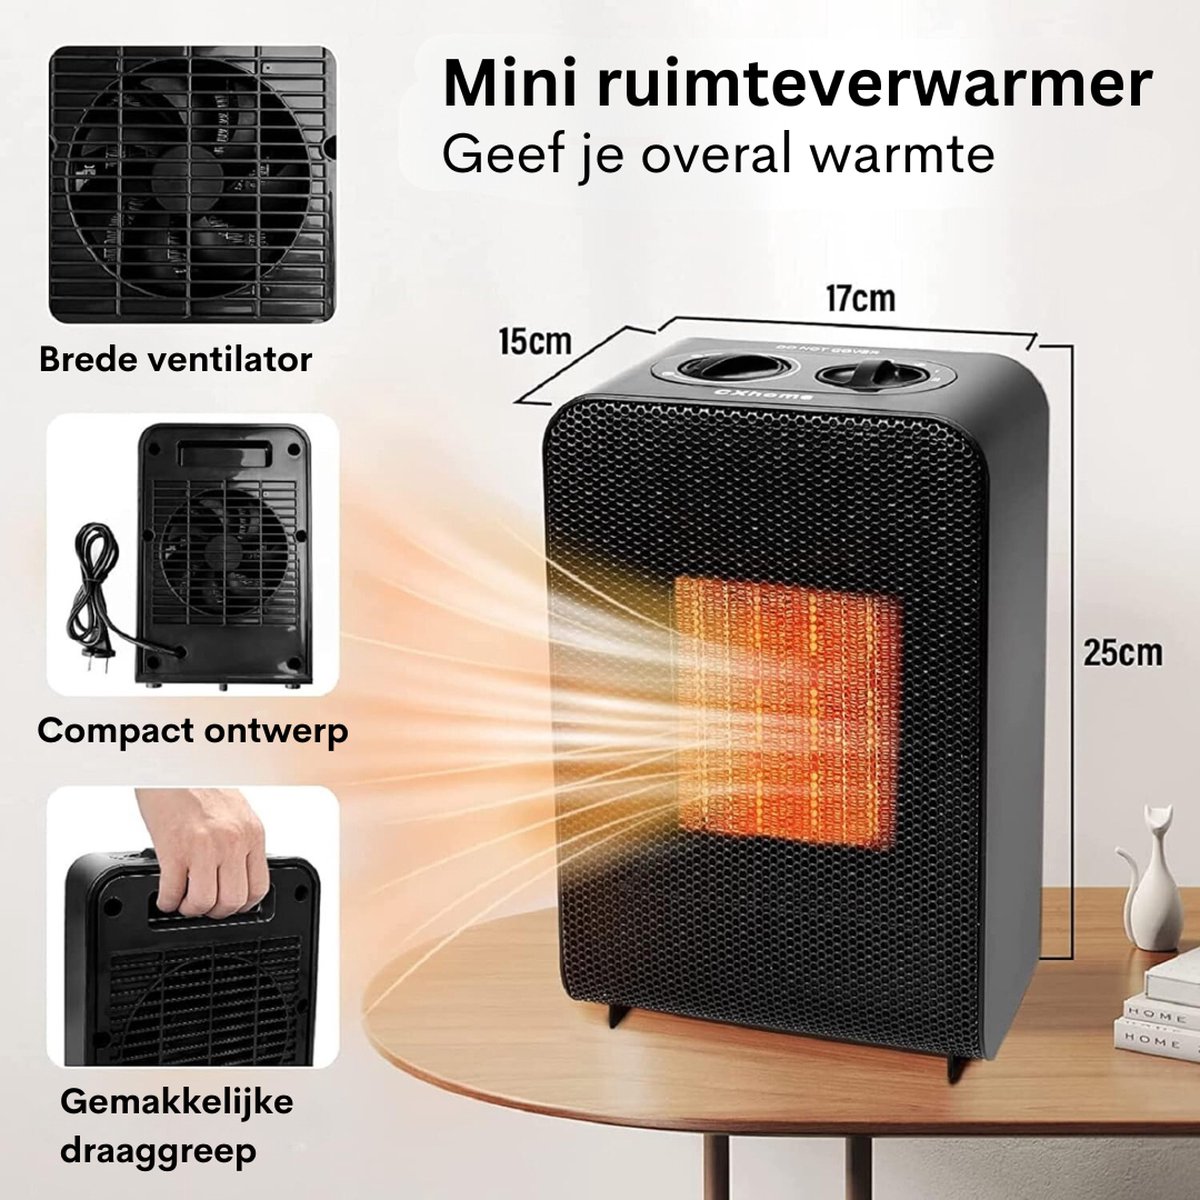 Ventilatorkachel - verwarming - oververhittingsbeveiliging - stille ventilator - electrice verwarming - eco - winter